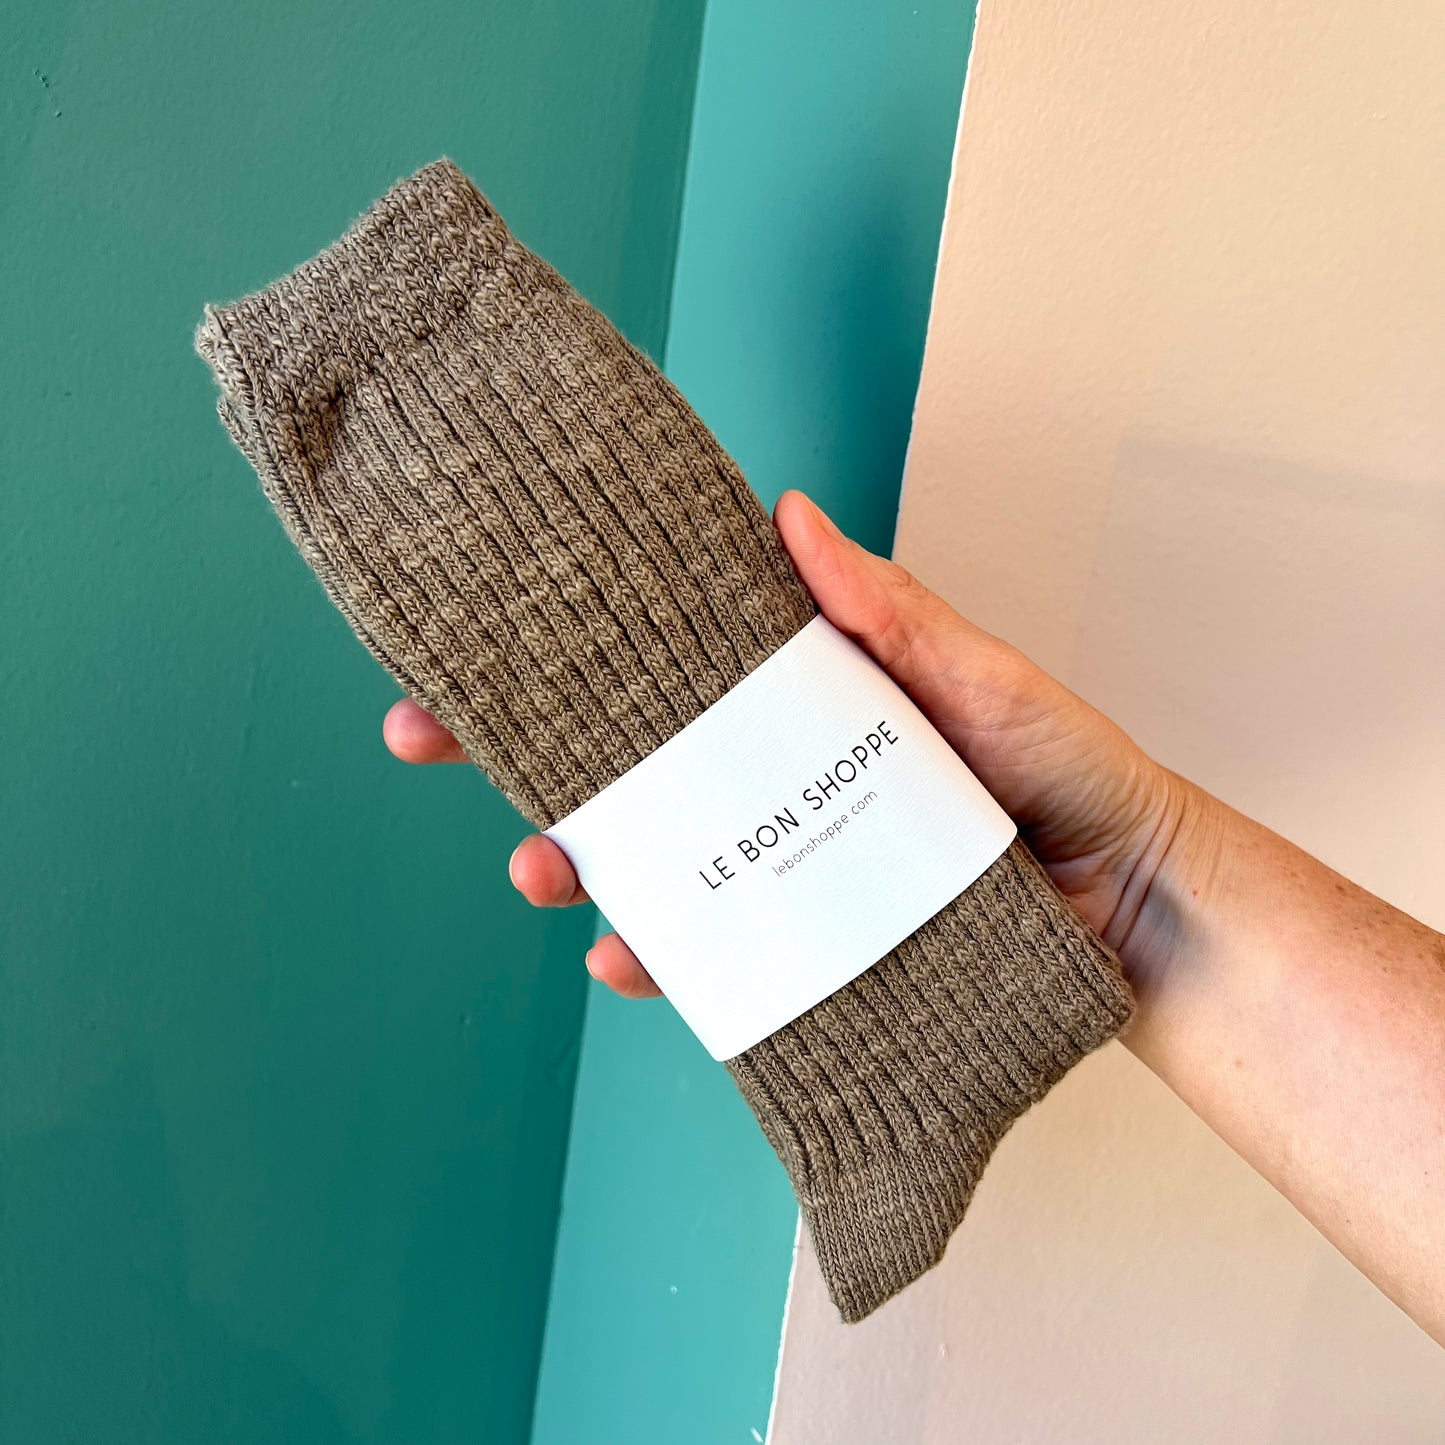 Flax Cottage Socks by Le Bon Shoppe